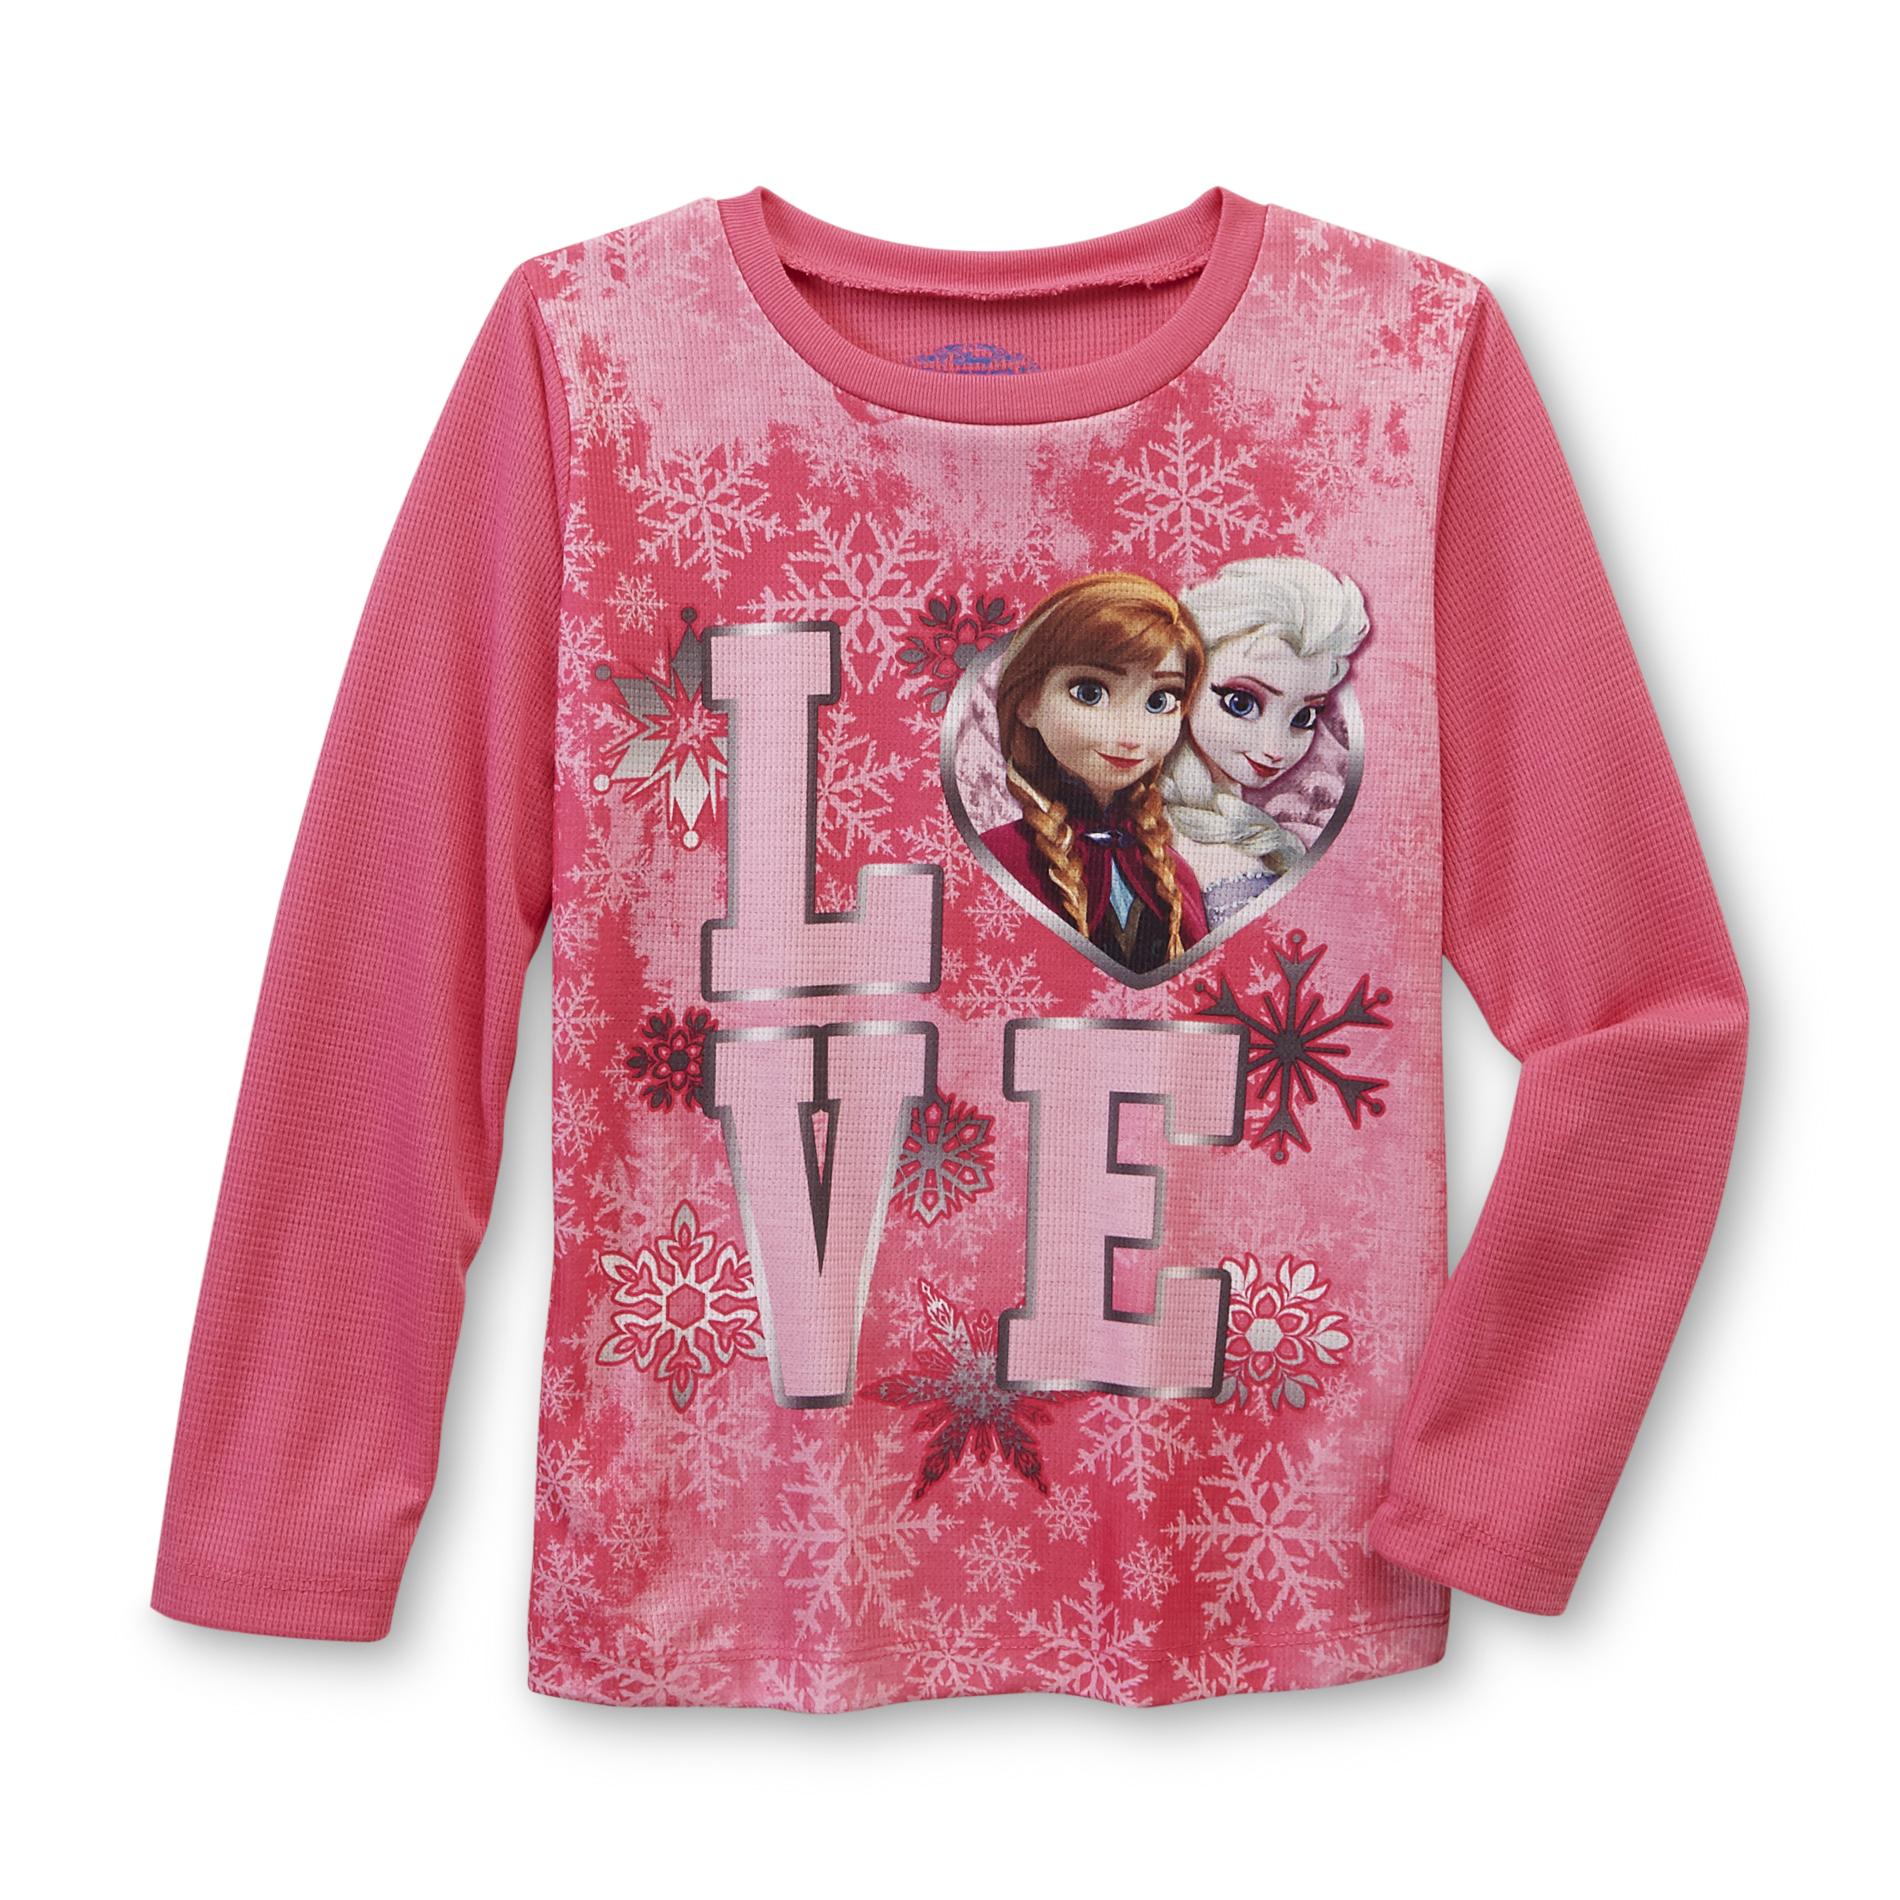 Disney Frozen Girl's Thermal Shirt - Anna & Elsa